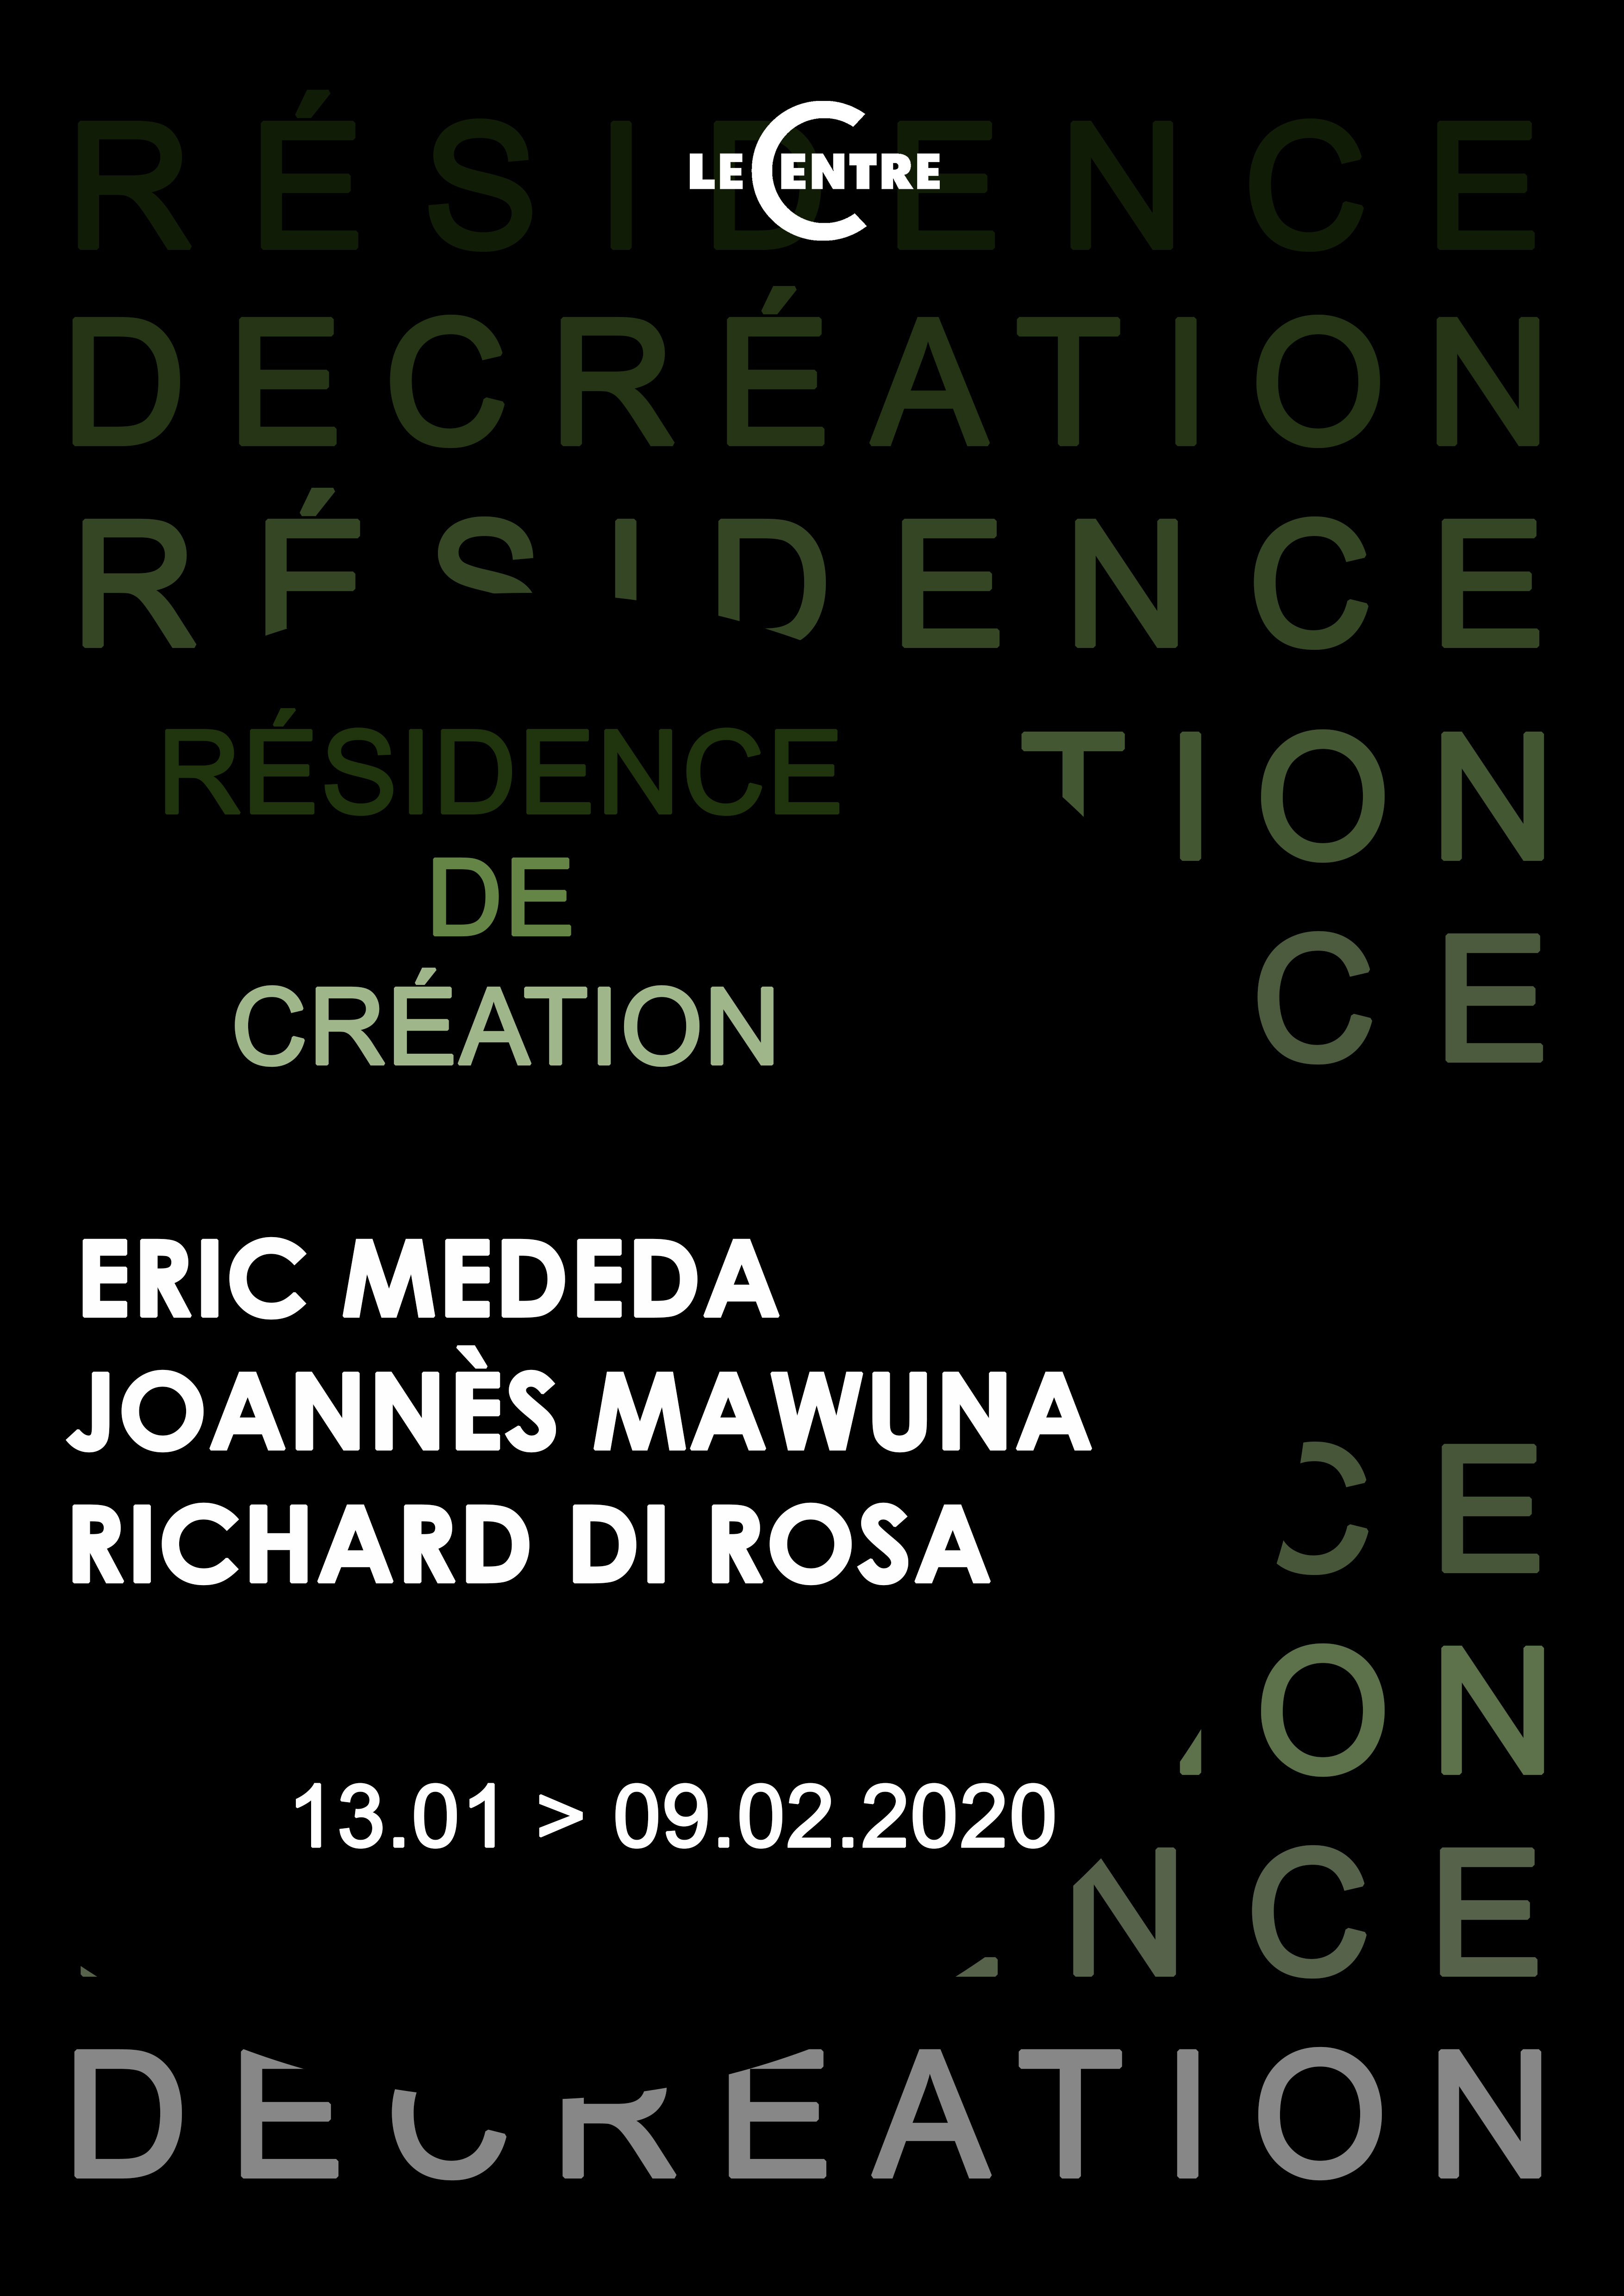 Eric Mededa, Joannès Mawuna, Richard di Rosa